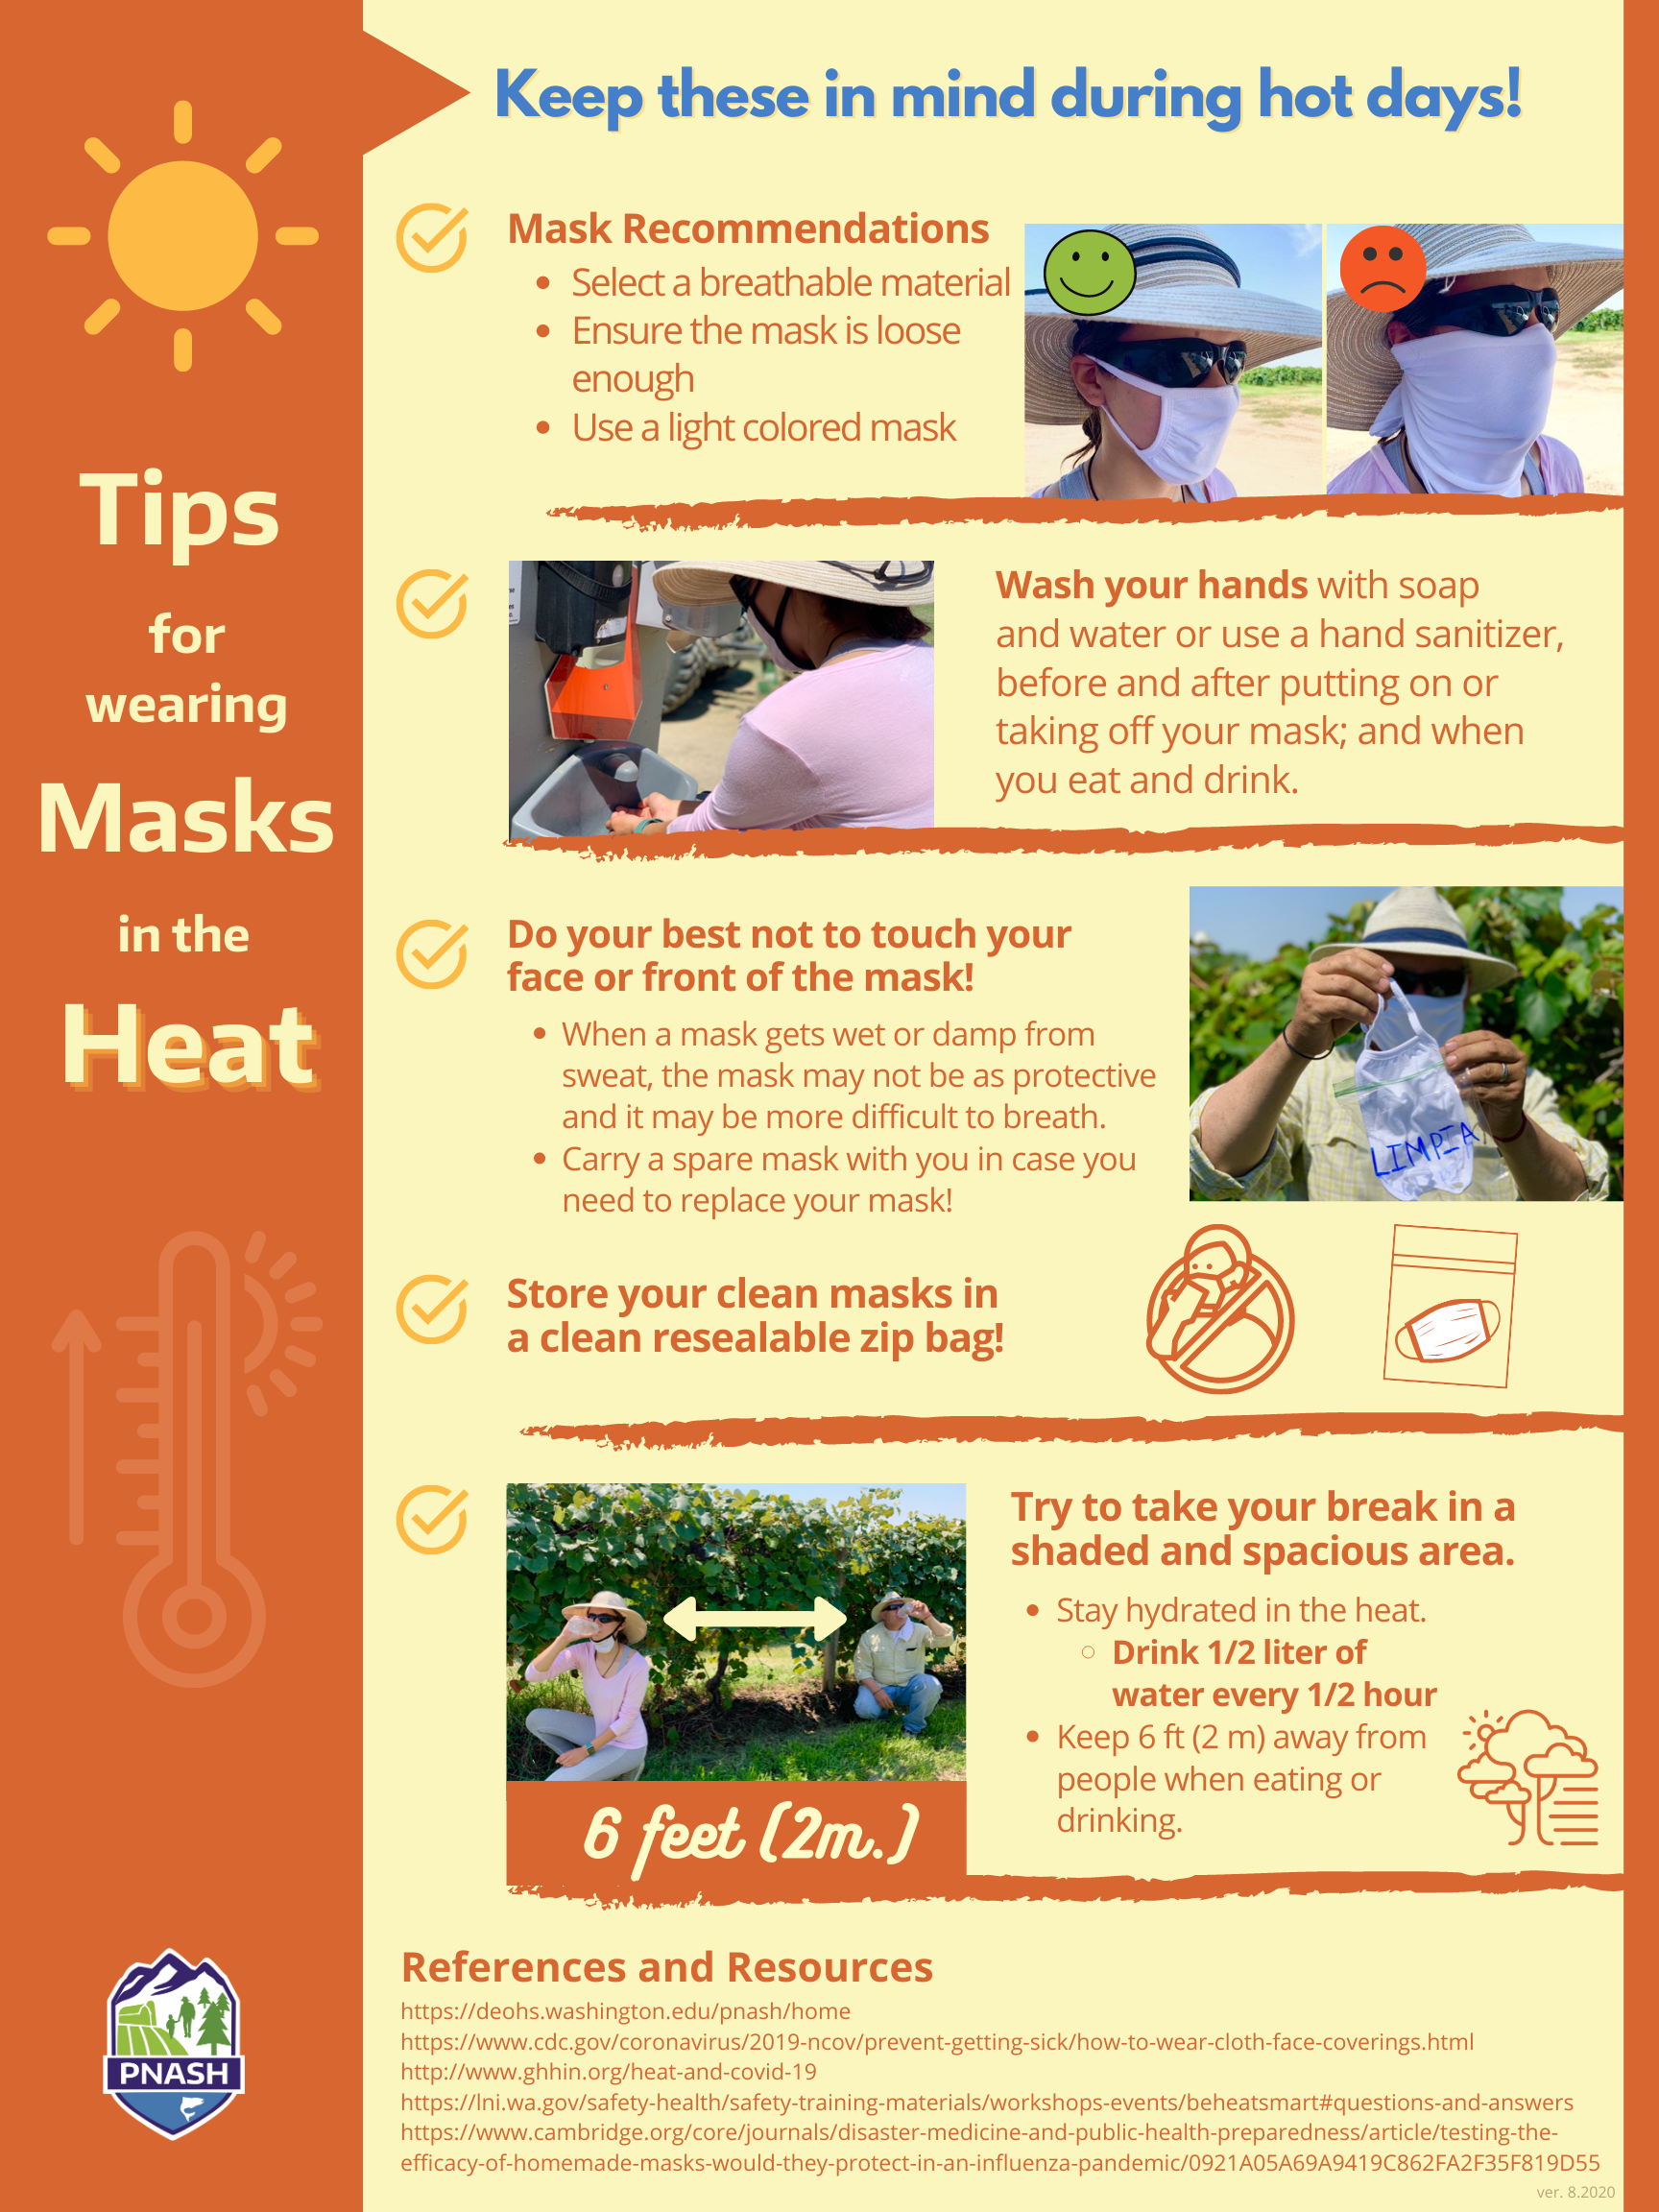 wearing masks in the heat